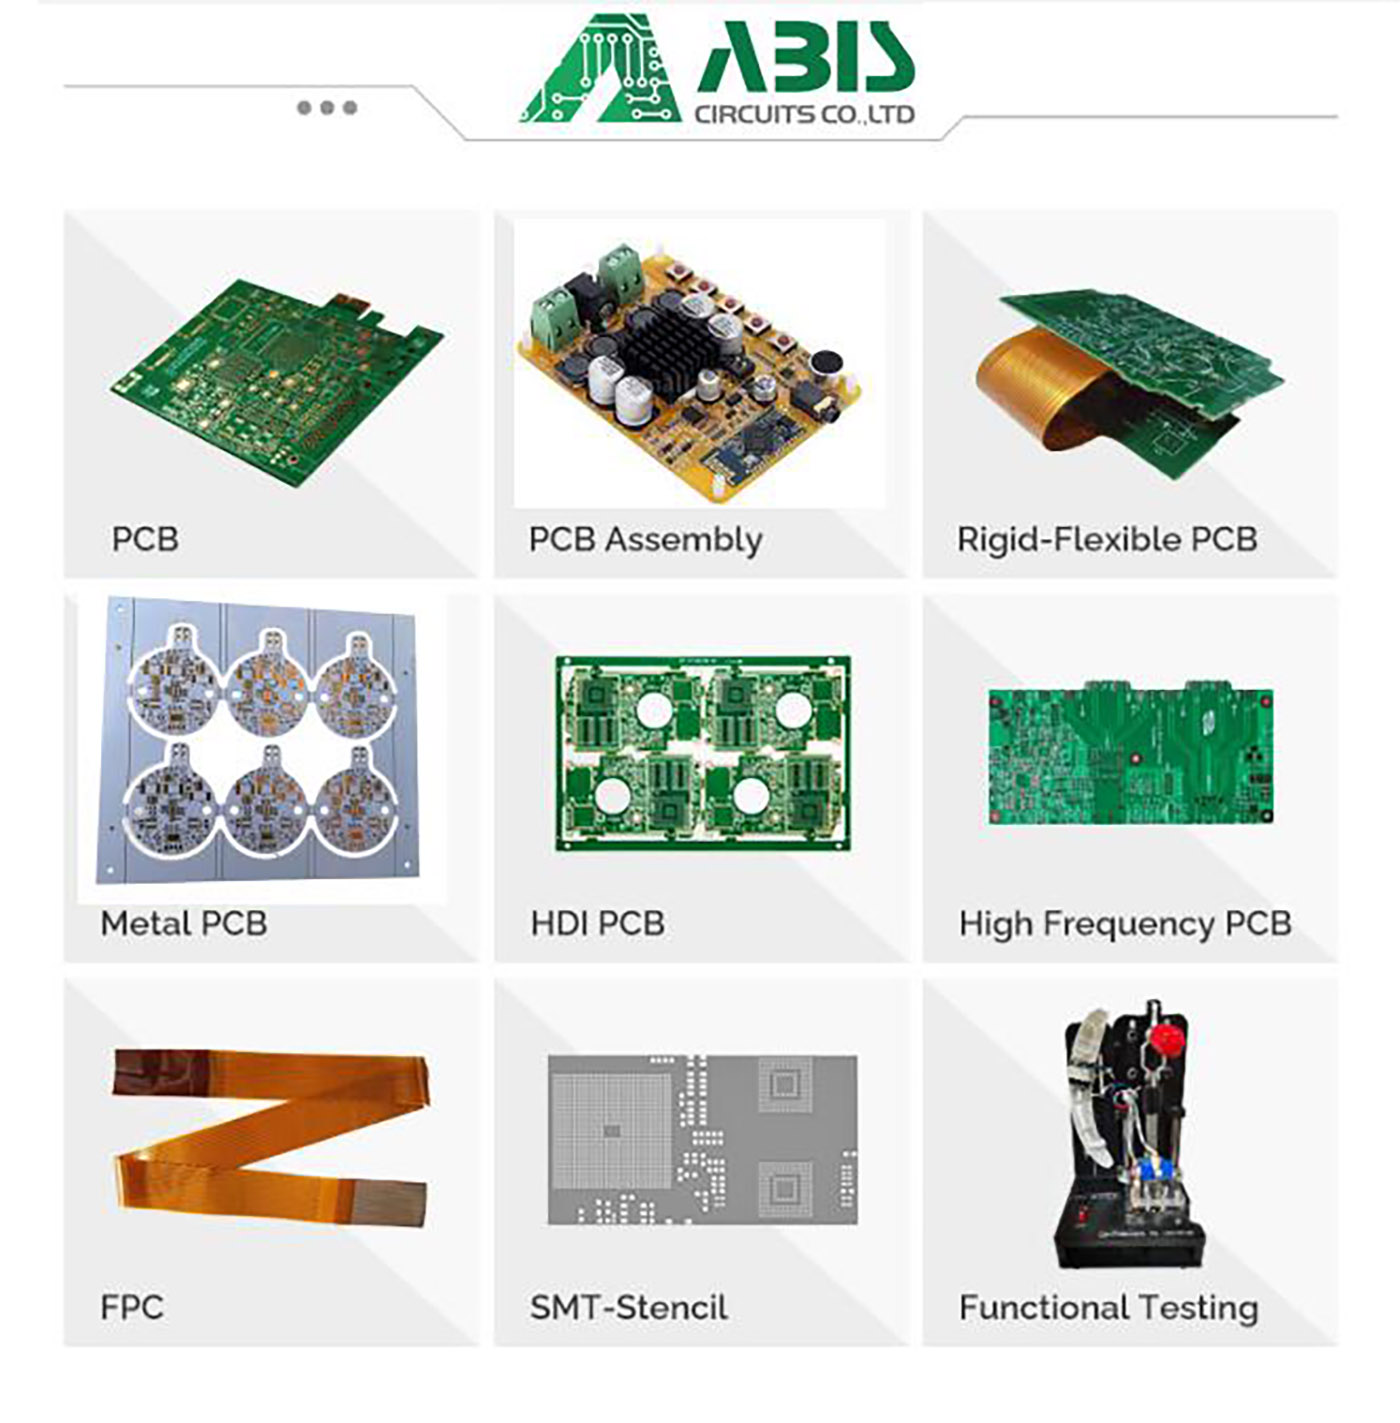 PCB mai ƙarfi, PCB mai sassauƙa, PCB mai ƙarfi-Flex, HDI PCB, PCB Assembly-1